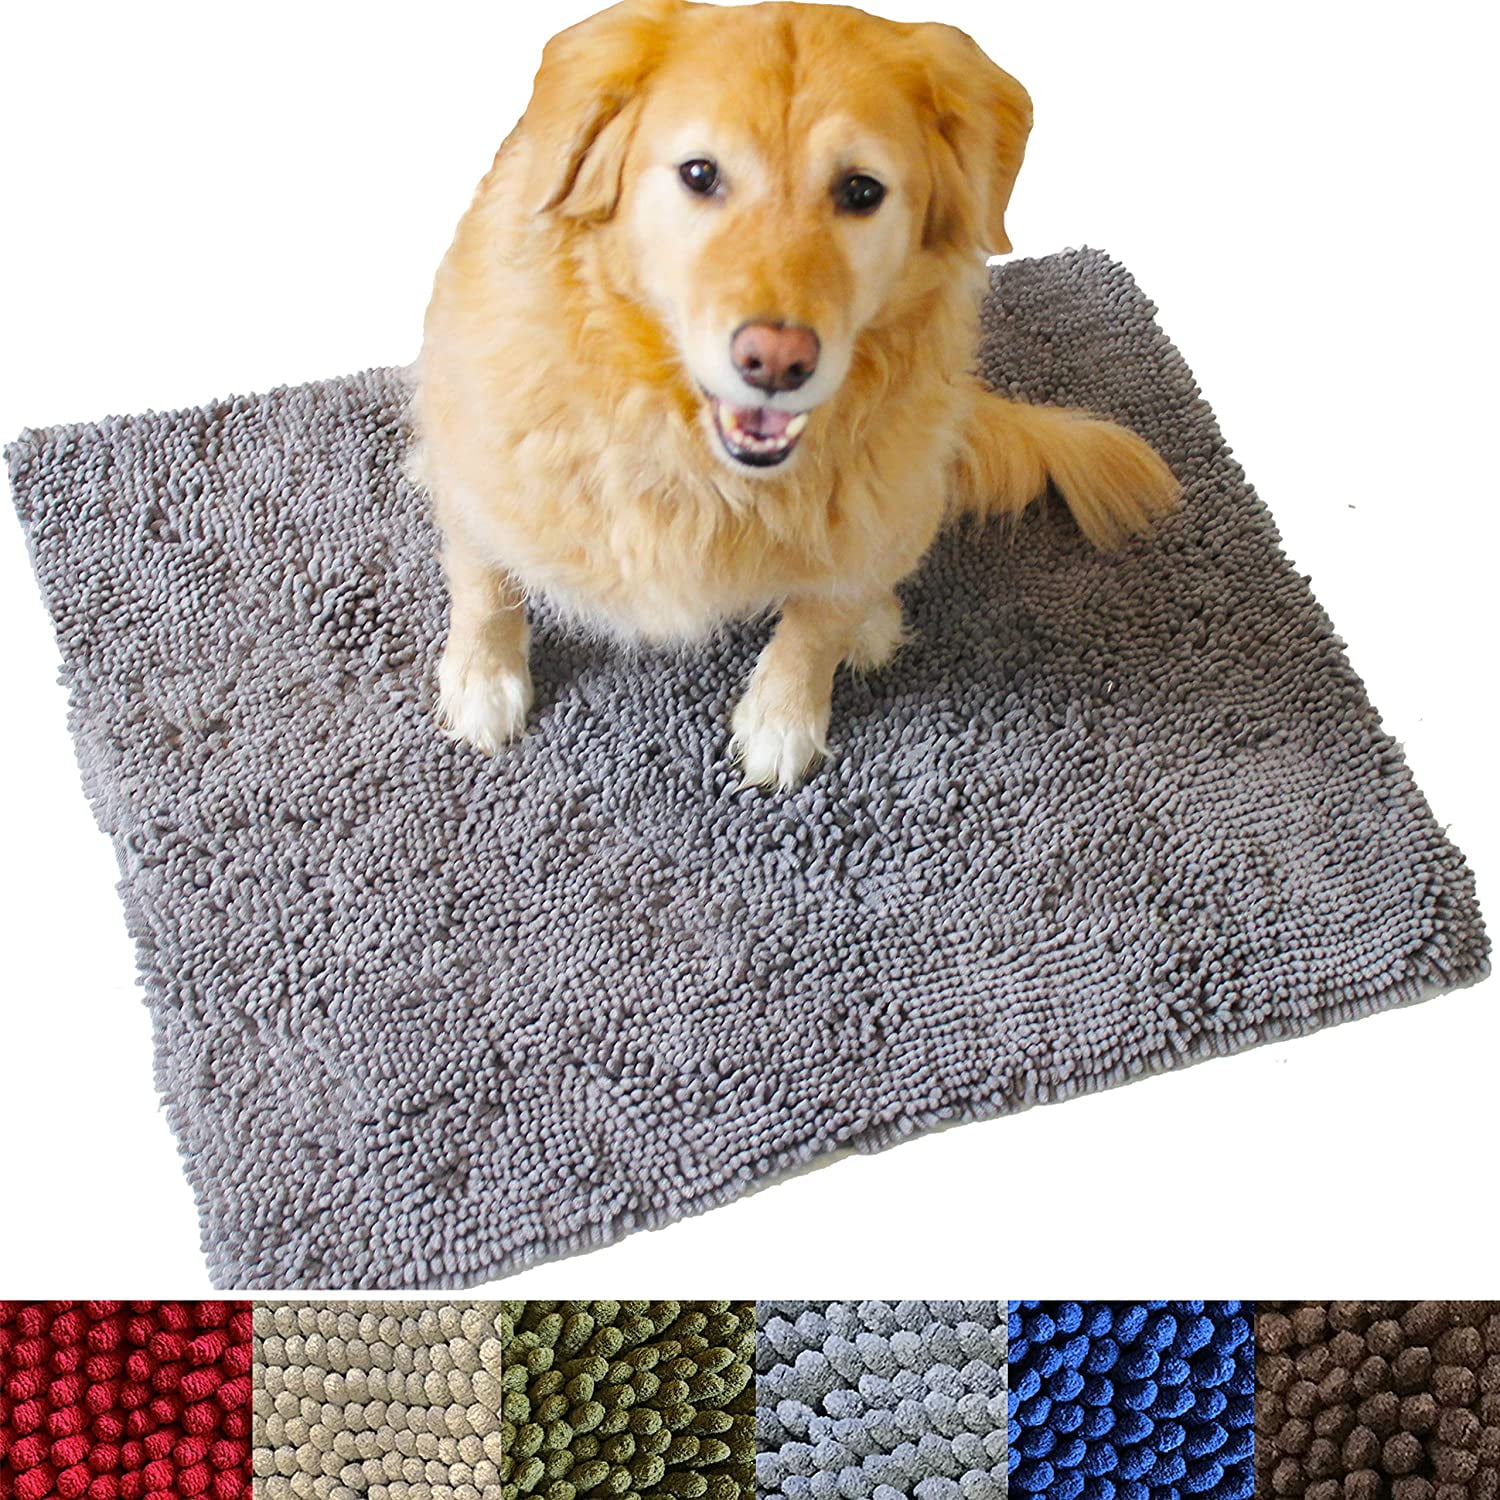 Enthusiast Gear - Puppy Paws Plush Mat - Super Absorbent Microfiber  Chenille Non-Slip Soft Dog Doormat - 20 x 30 Brown 